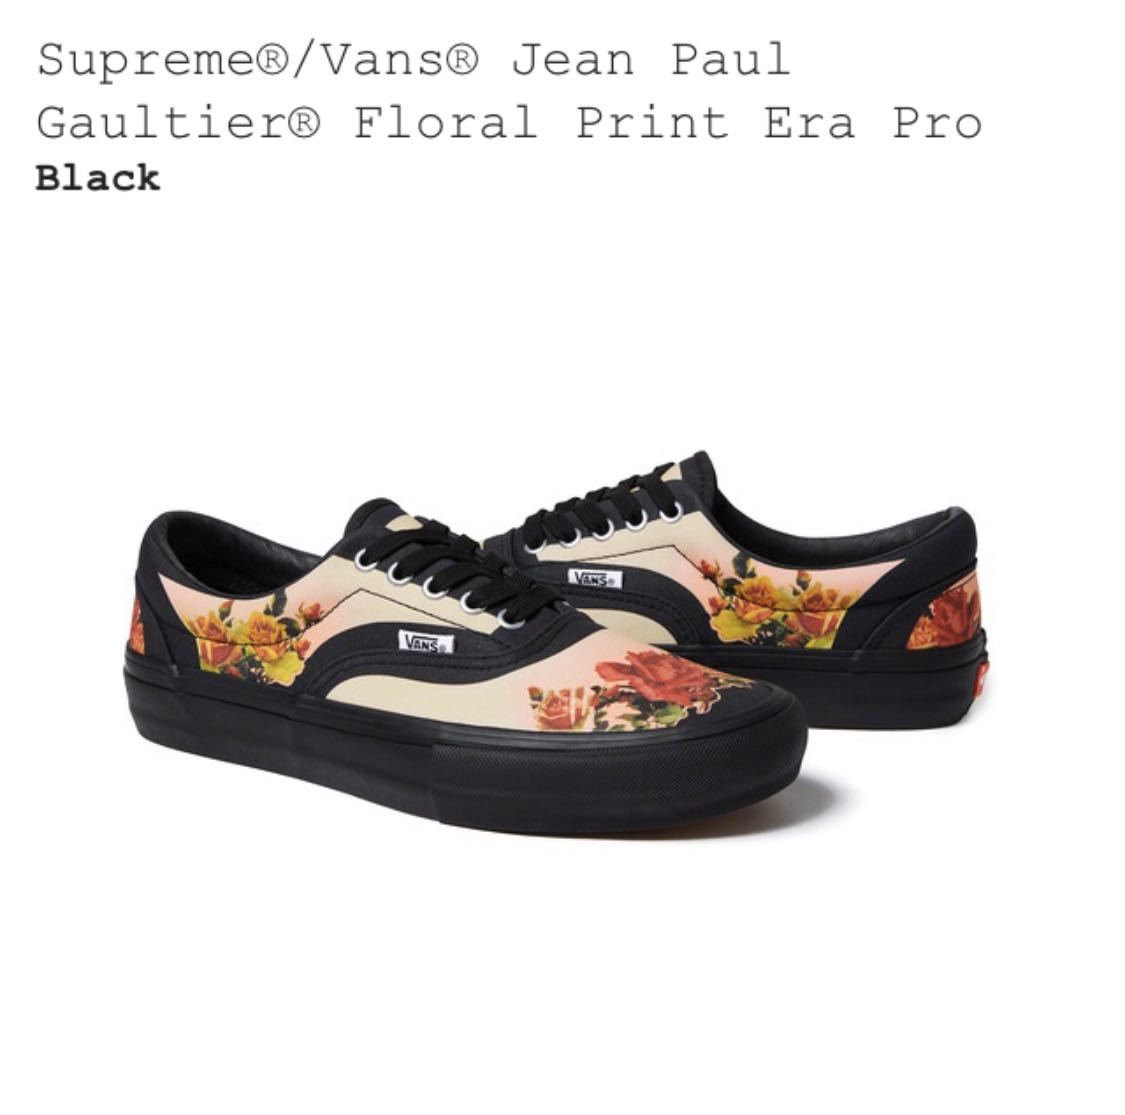 代購代標第一品牌－樂淘letao－Supreme Vans Jean Paul Gaultier